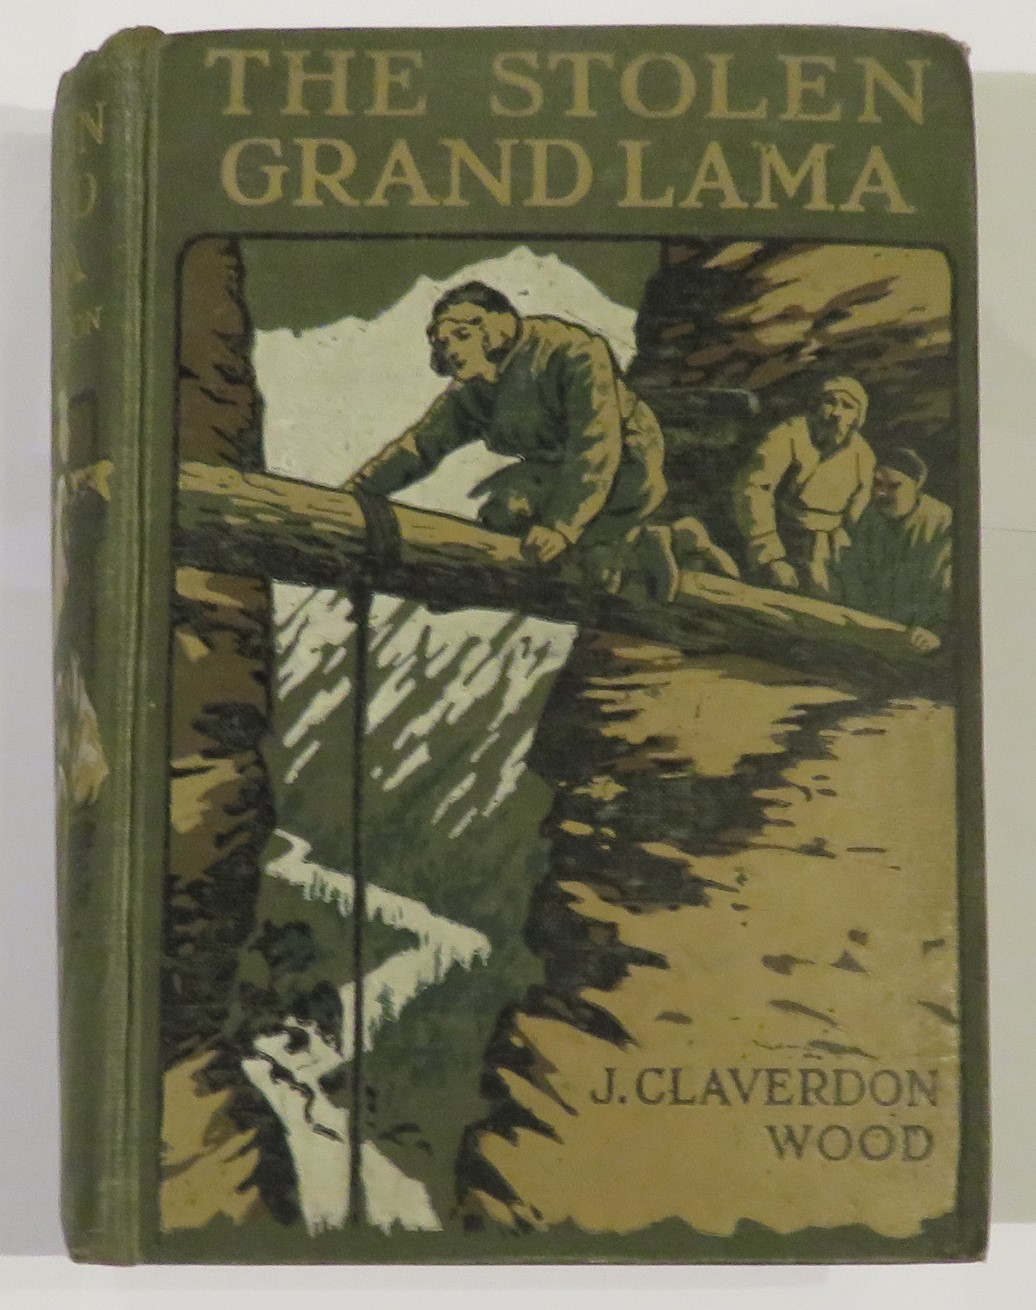 The Stolen Grand Lama: An English Boy's Adventures in Wild Tibet